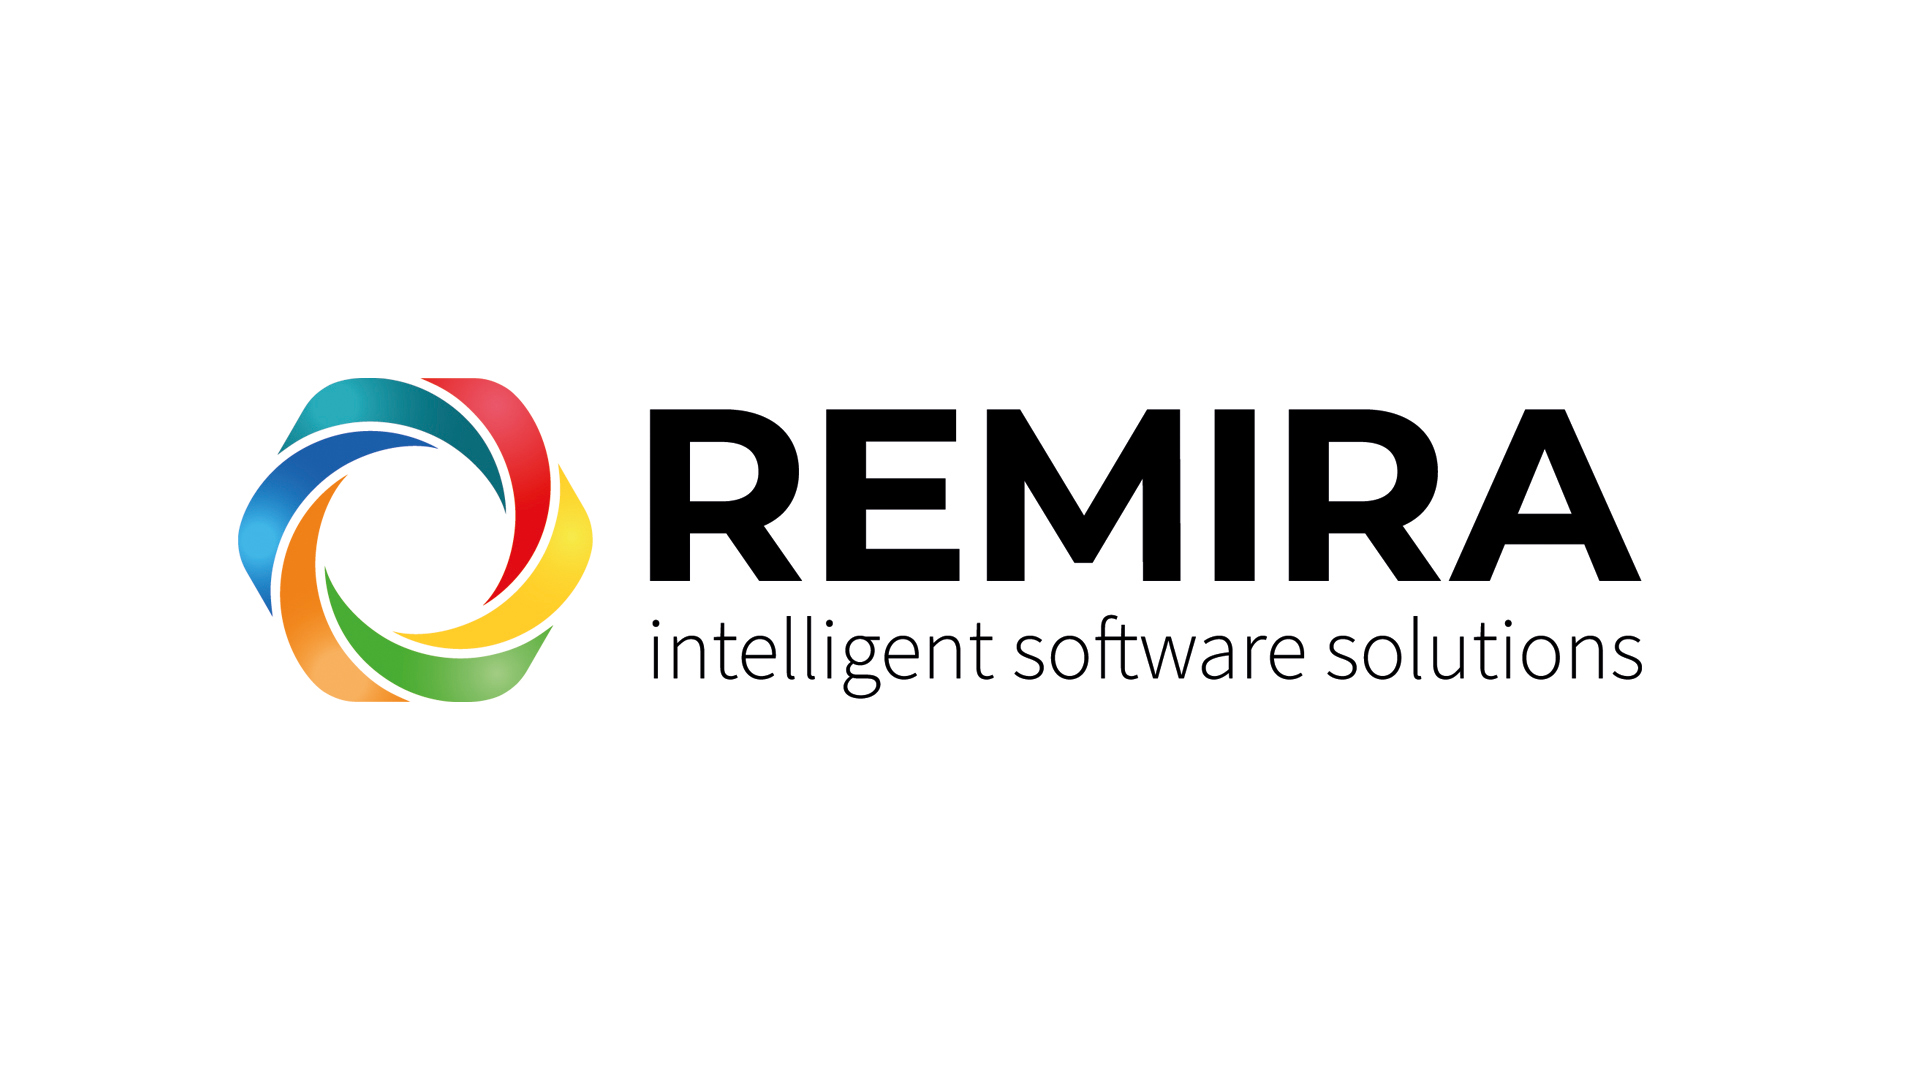 (c) Remira.com